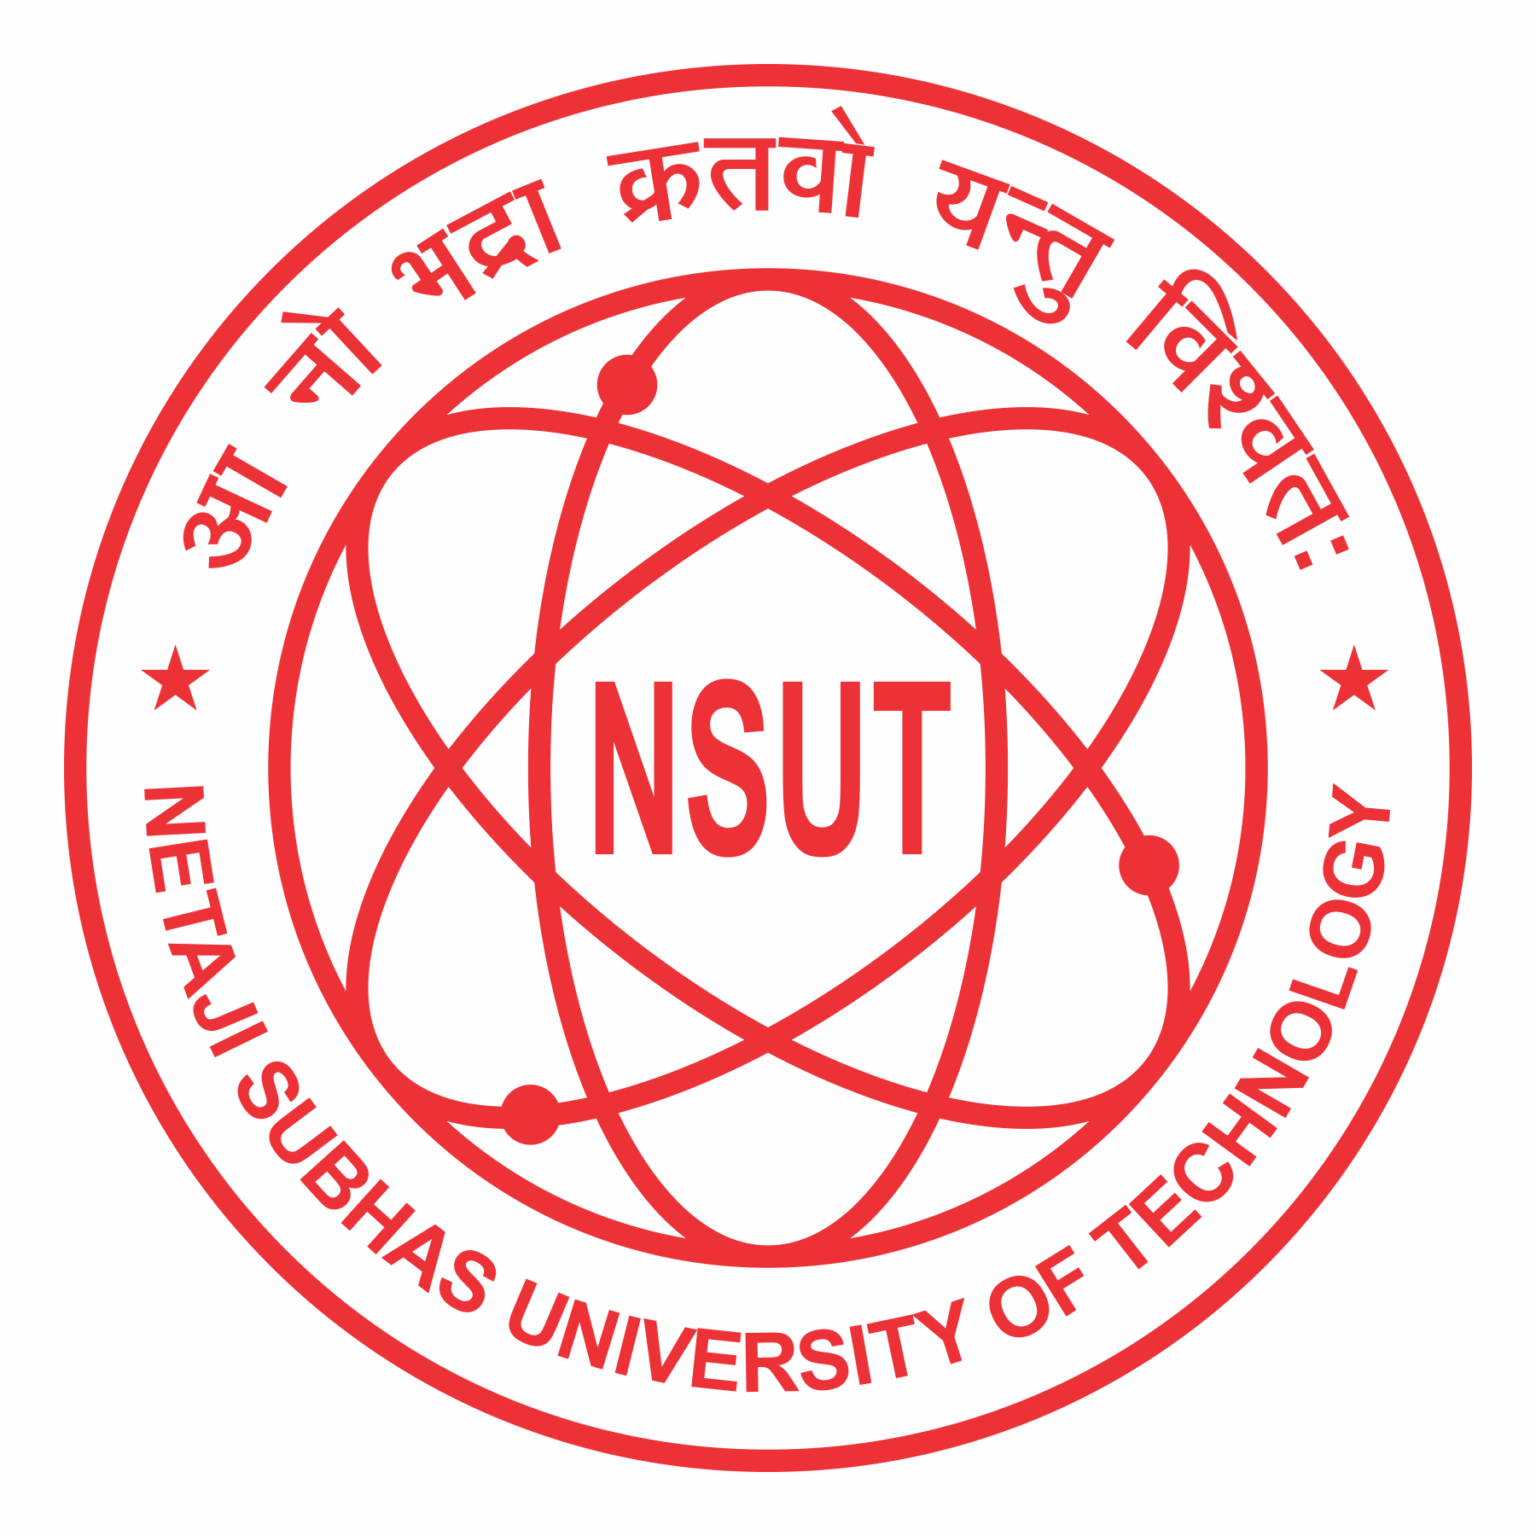 Netaji Subhas University Admission Adda